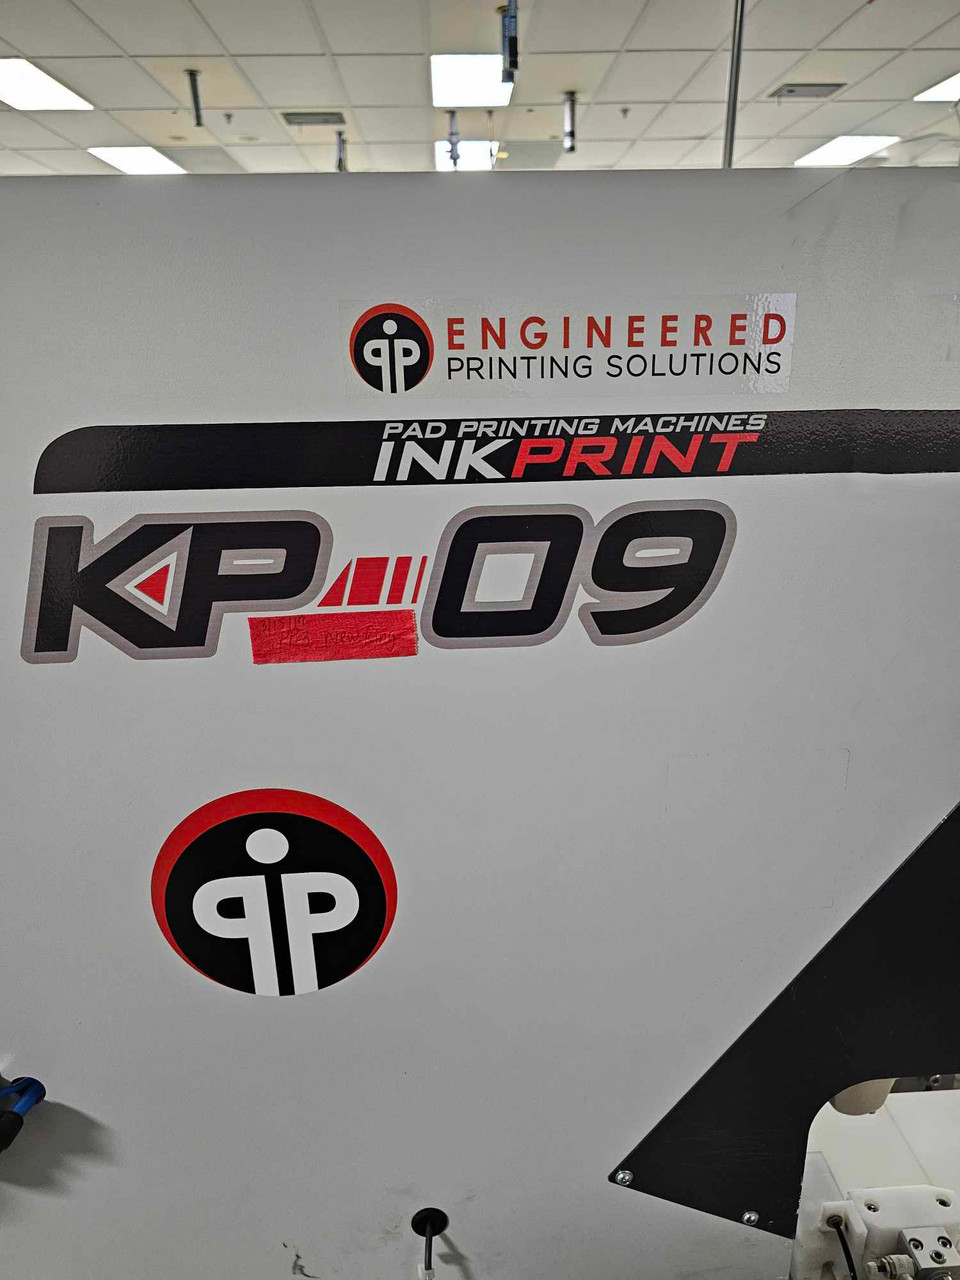 Engineered Printing Solutions KP-09 Pad Printing Machine (2017)